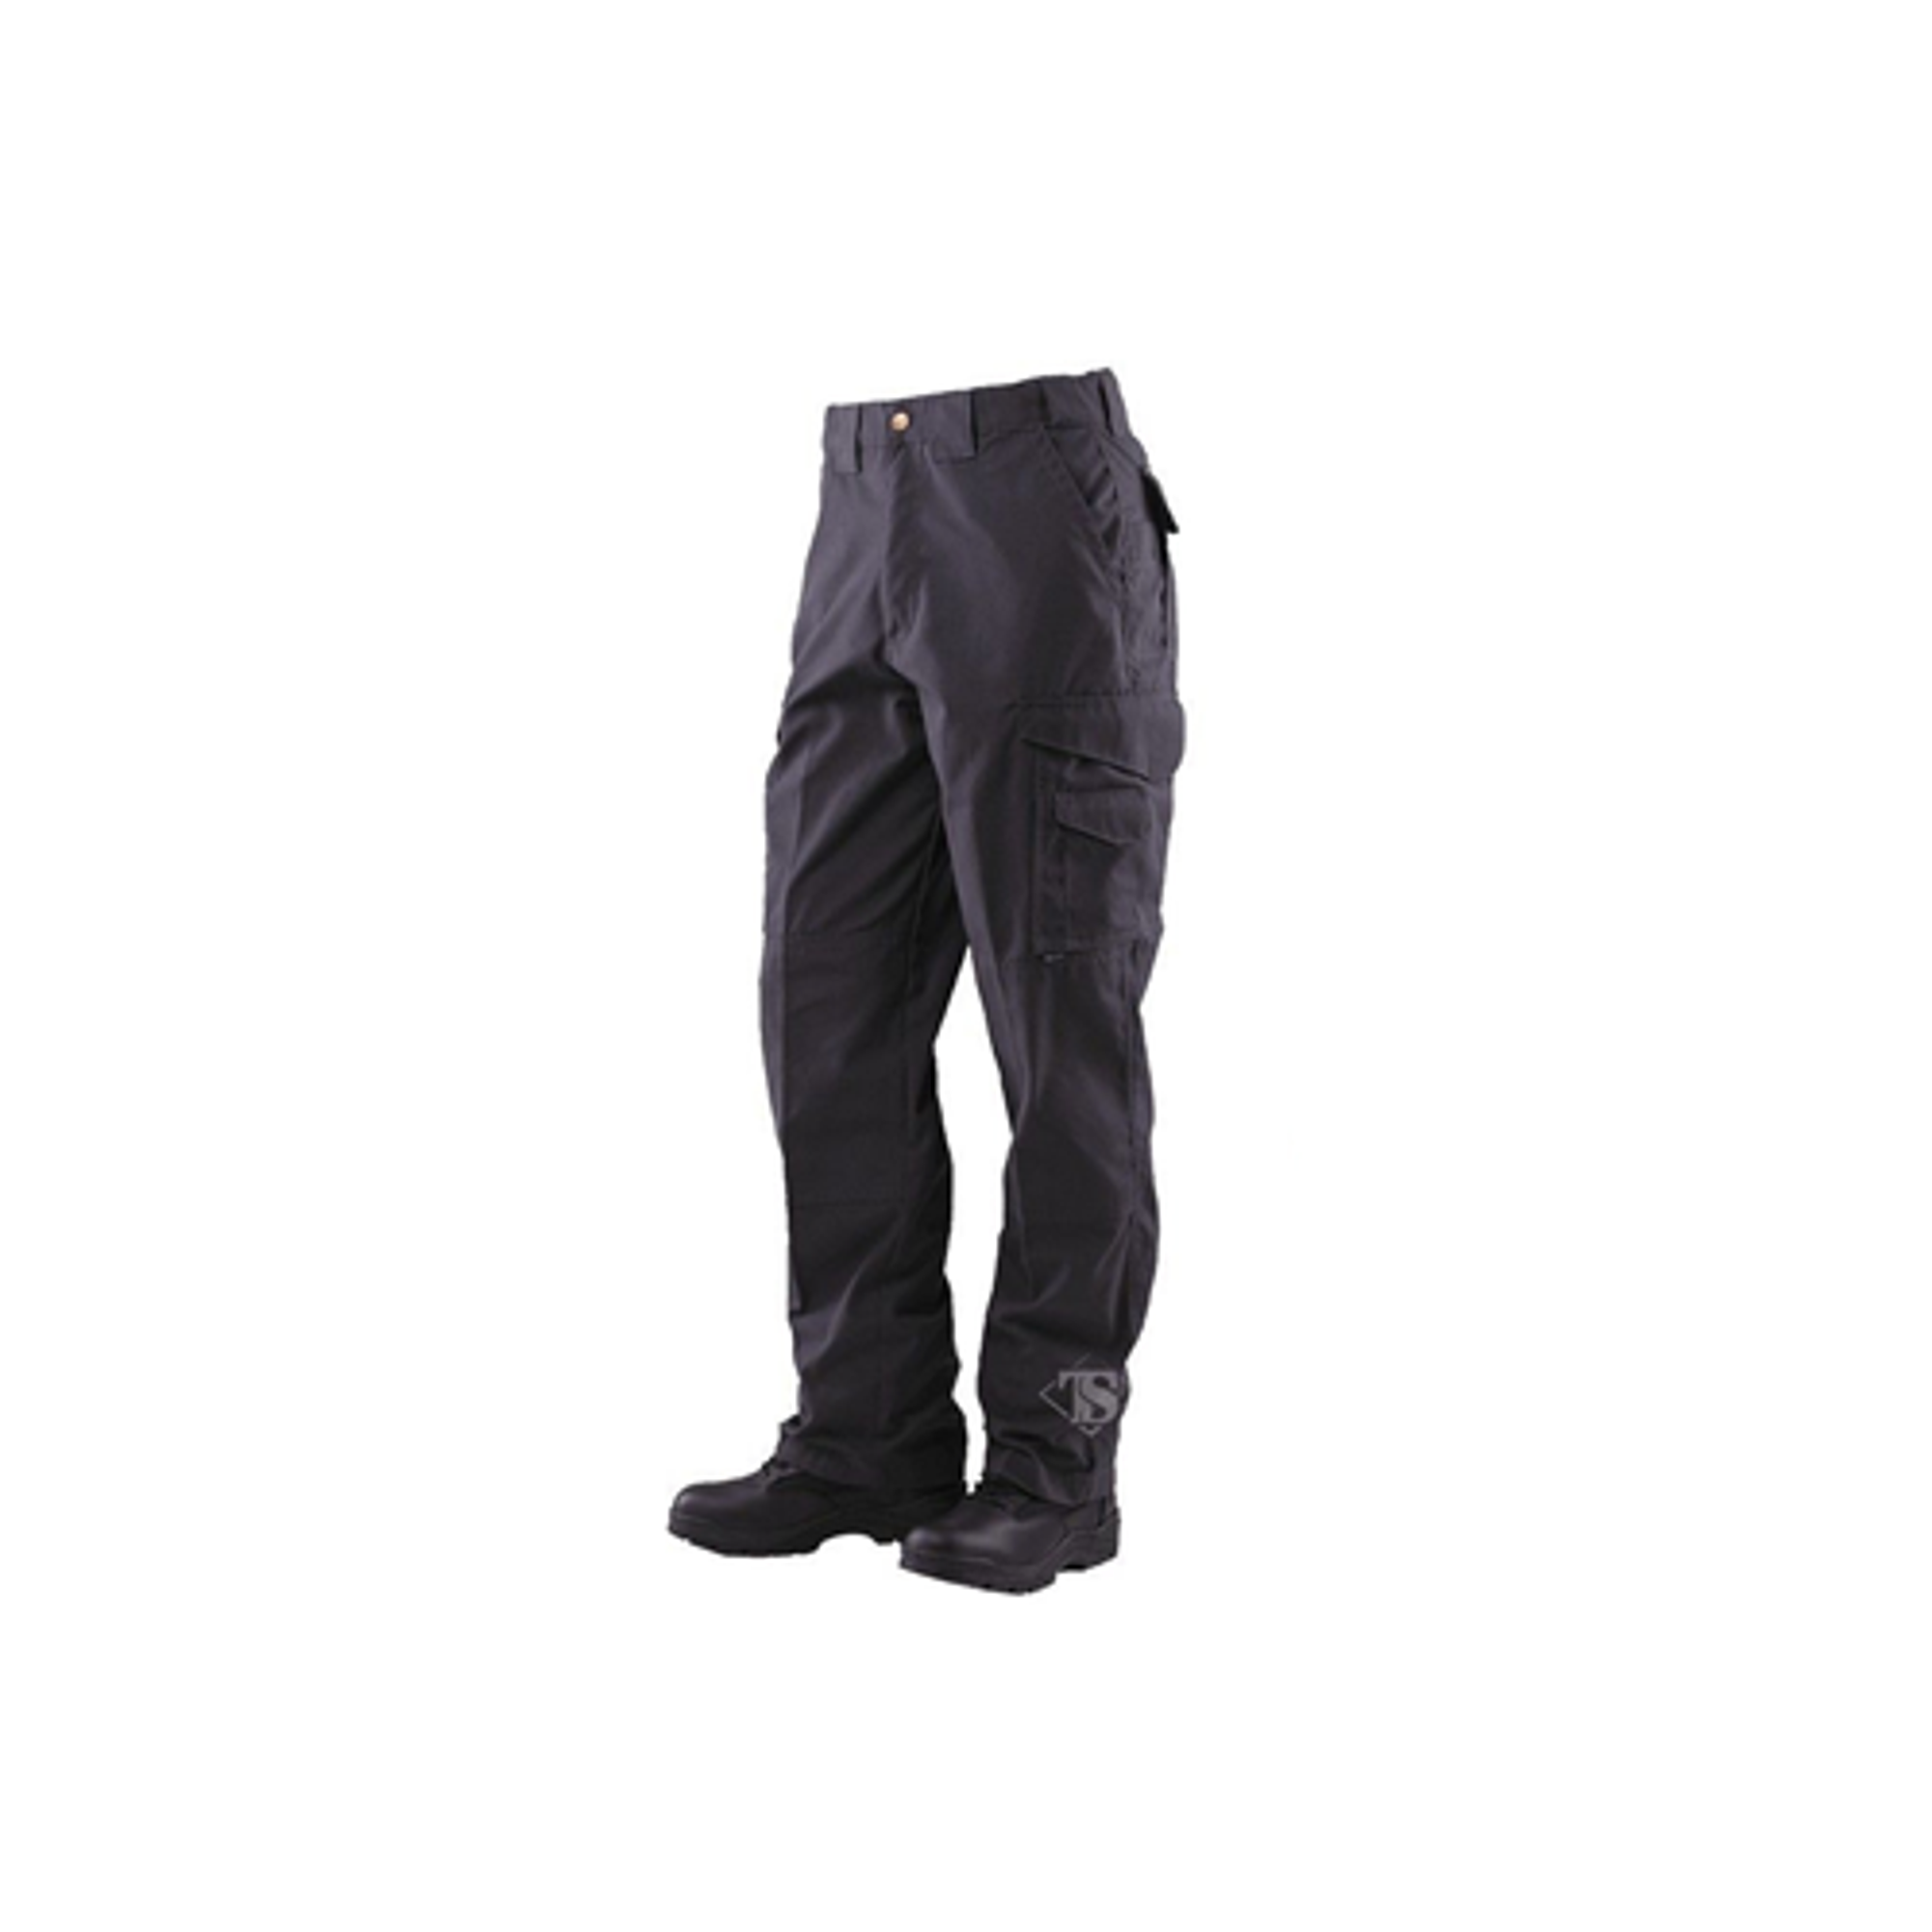 24-7 Original Tactical Pants - 6.5oz - Black - KRTSP-1062028